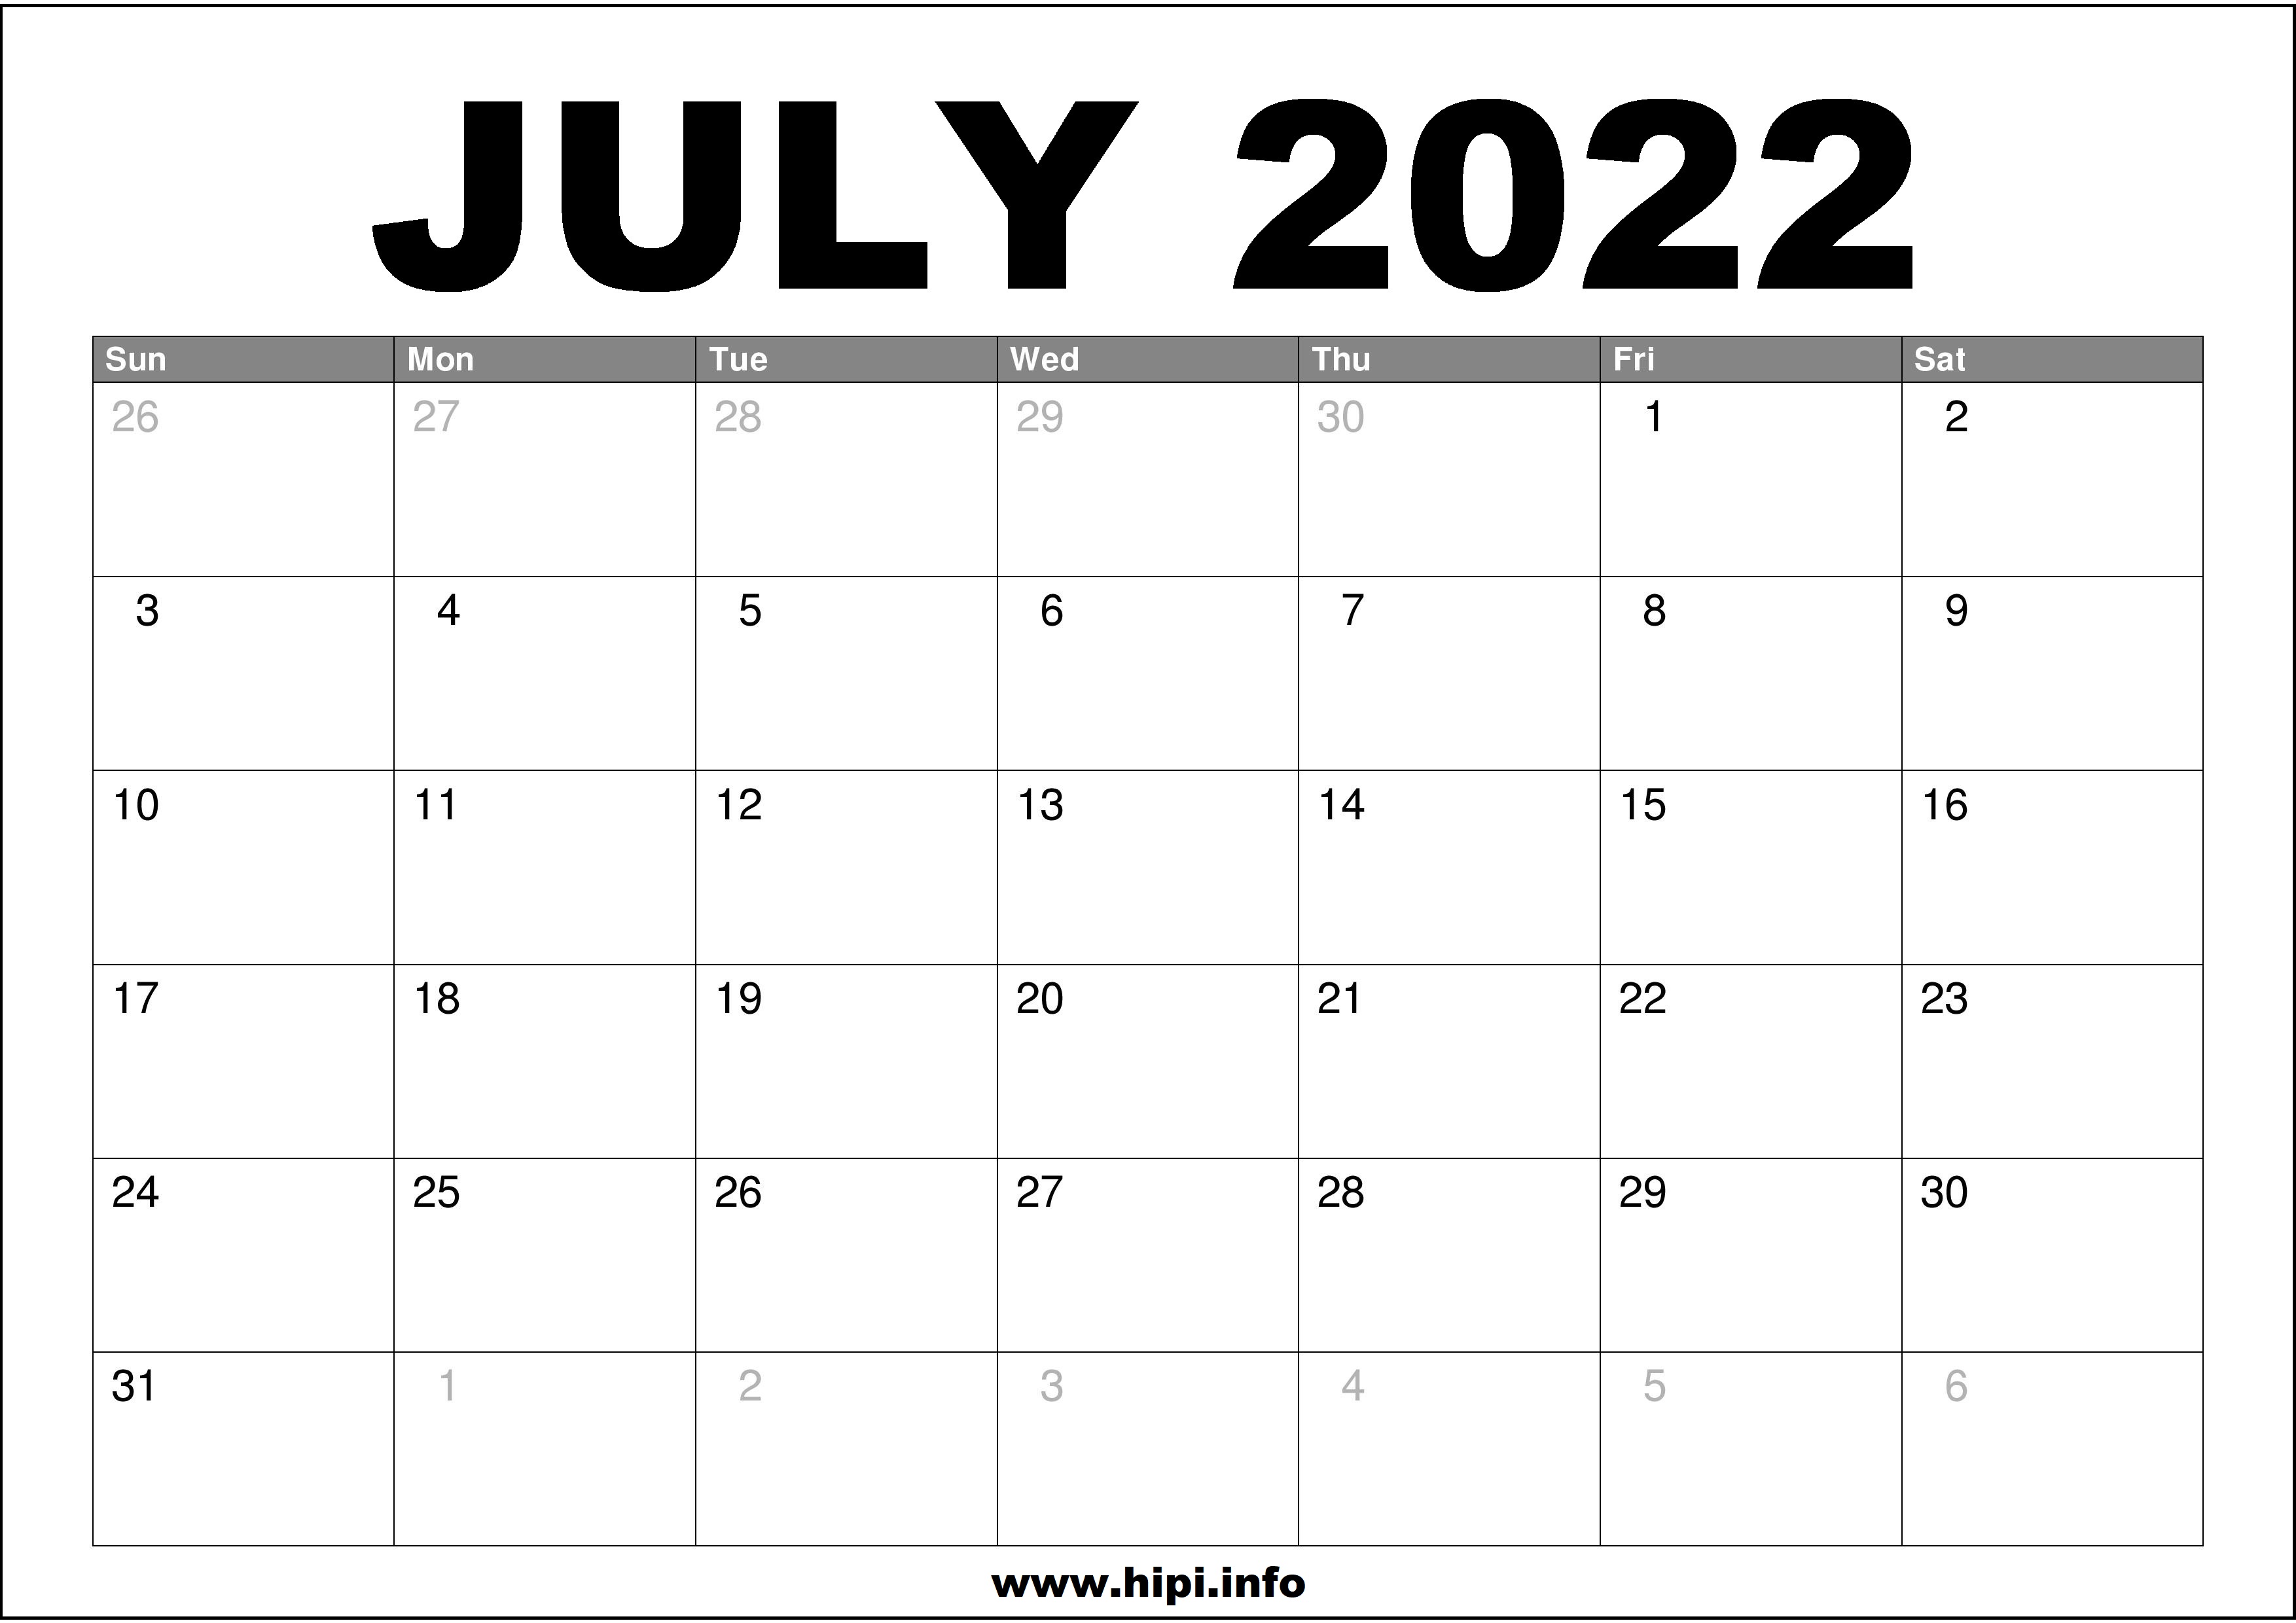 Monthly Calendar July 2022 Printable July 2022 Calendar Printable Free - Hipi.info | Calendars Printable Free